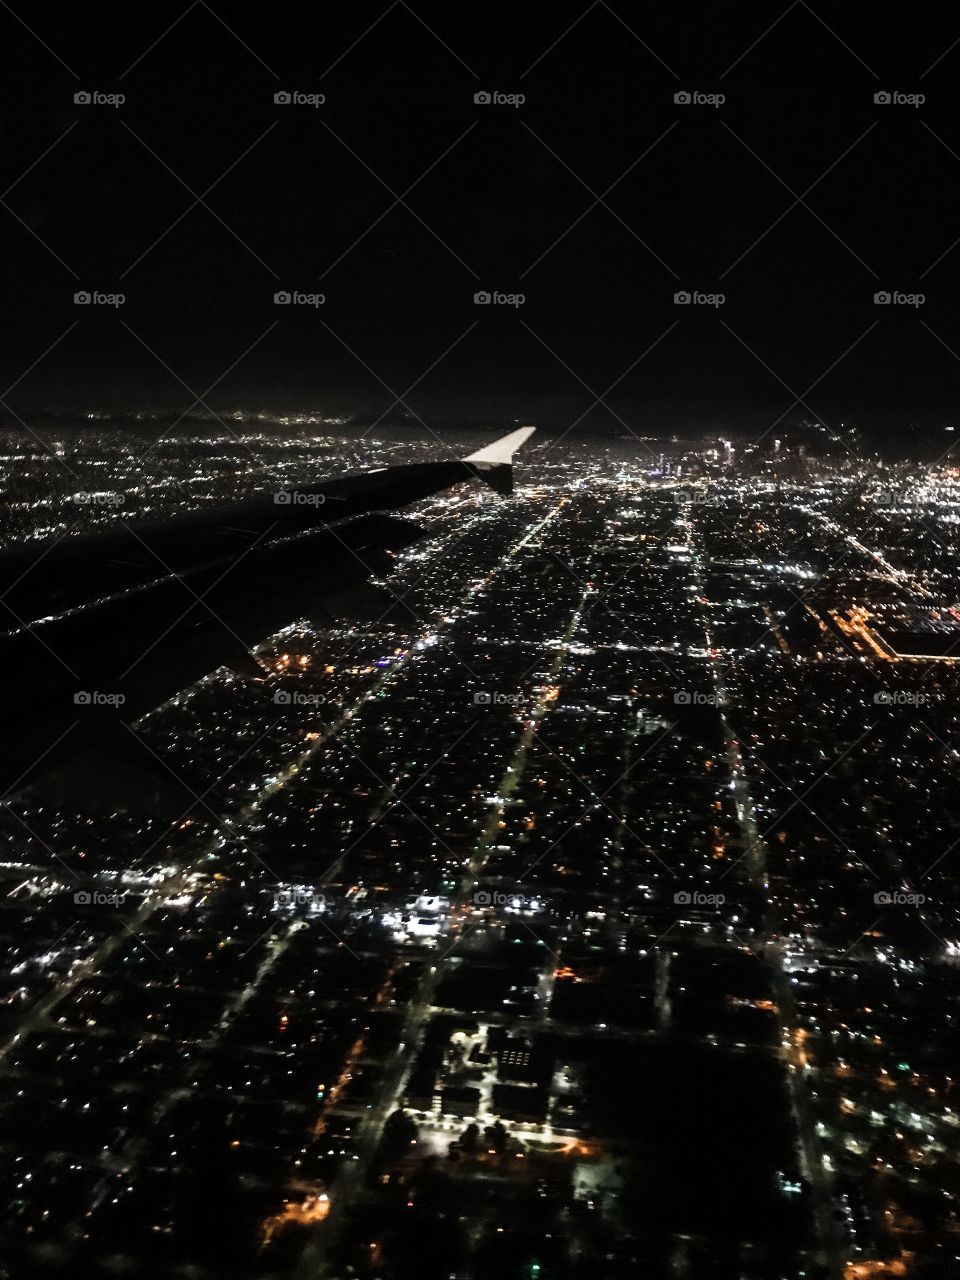 LA flyover at night